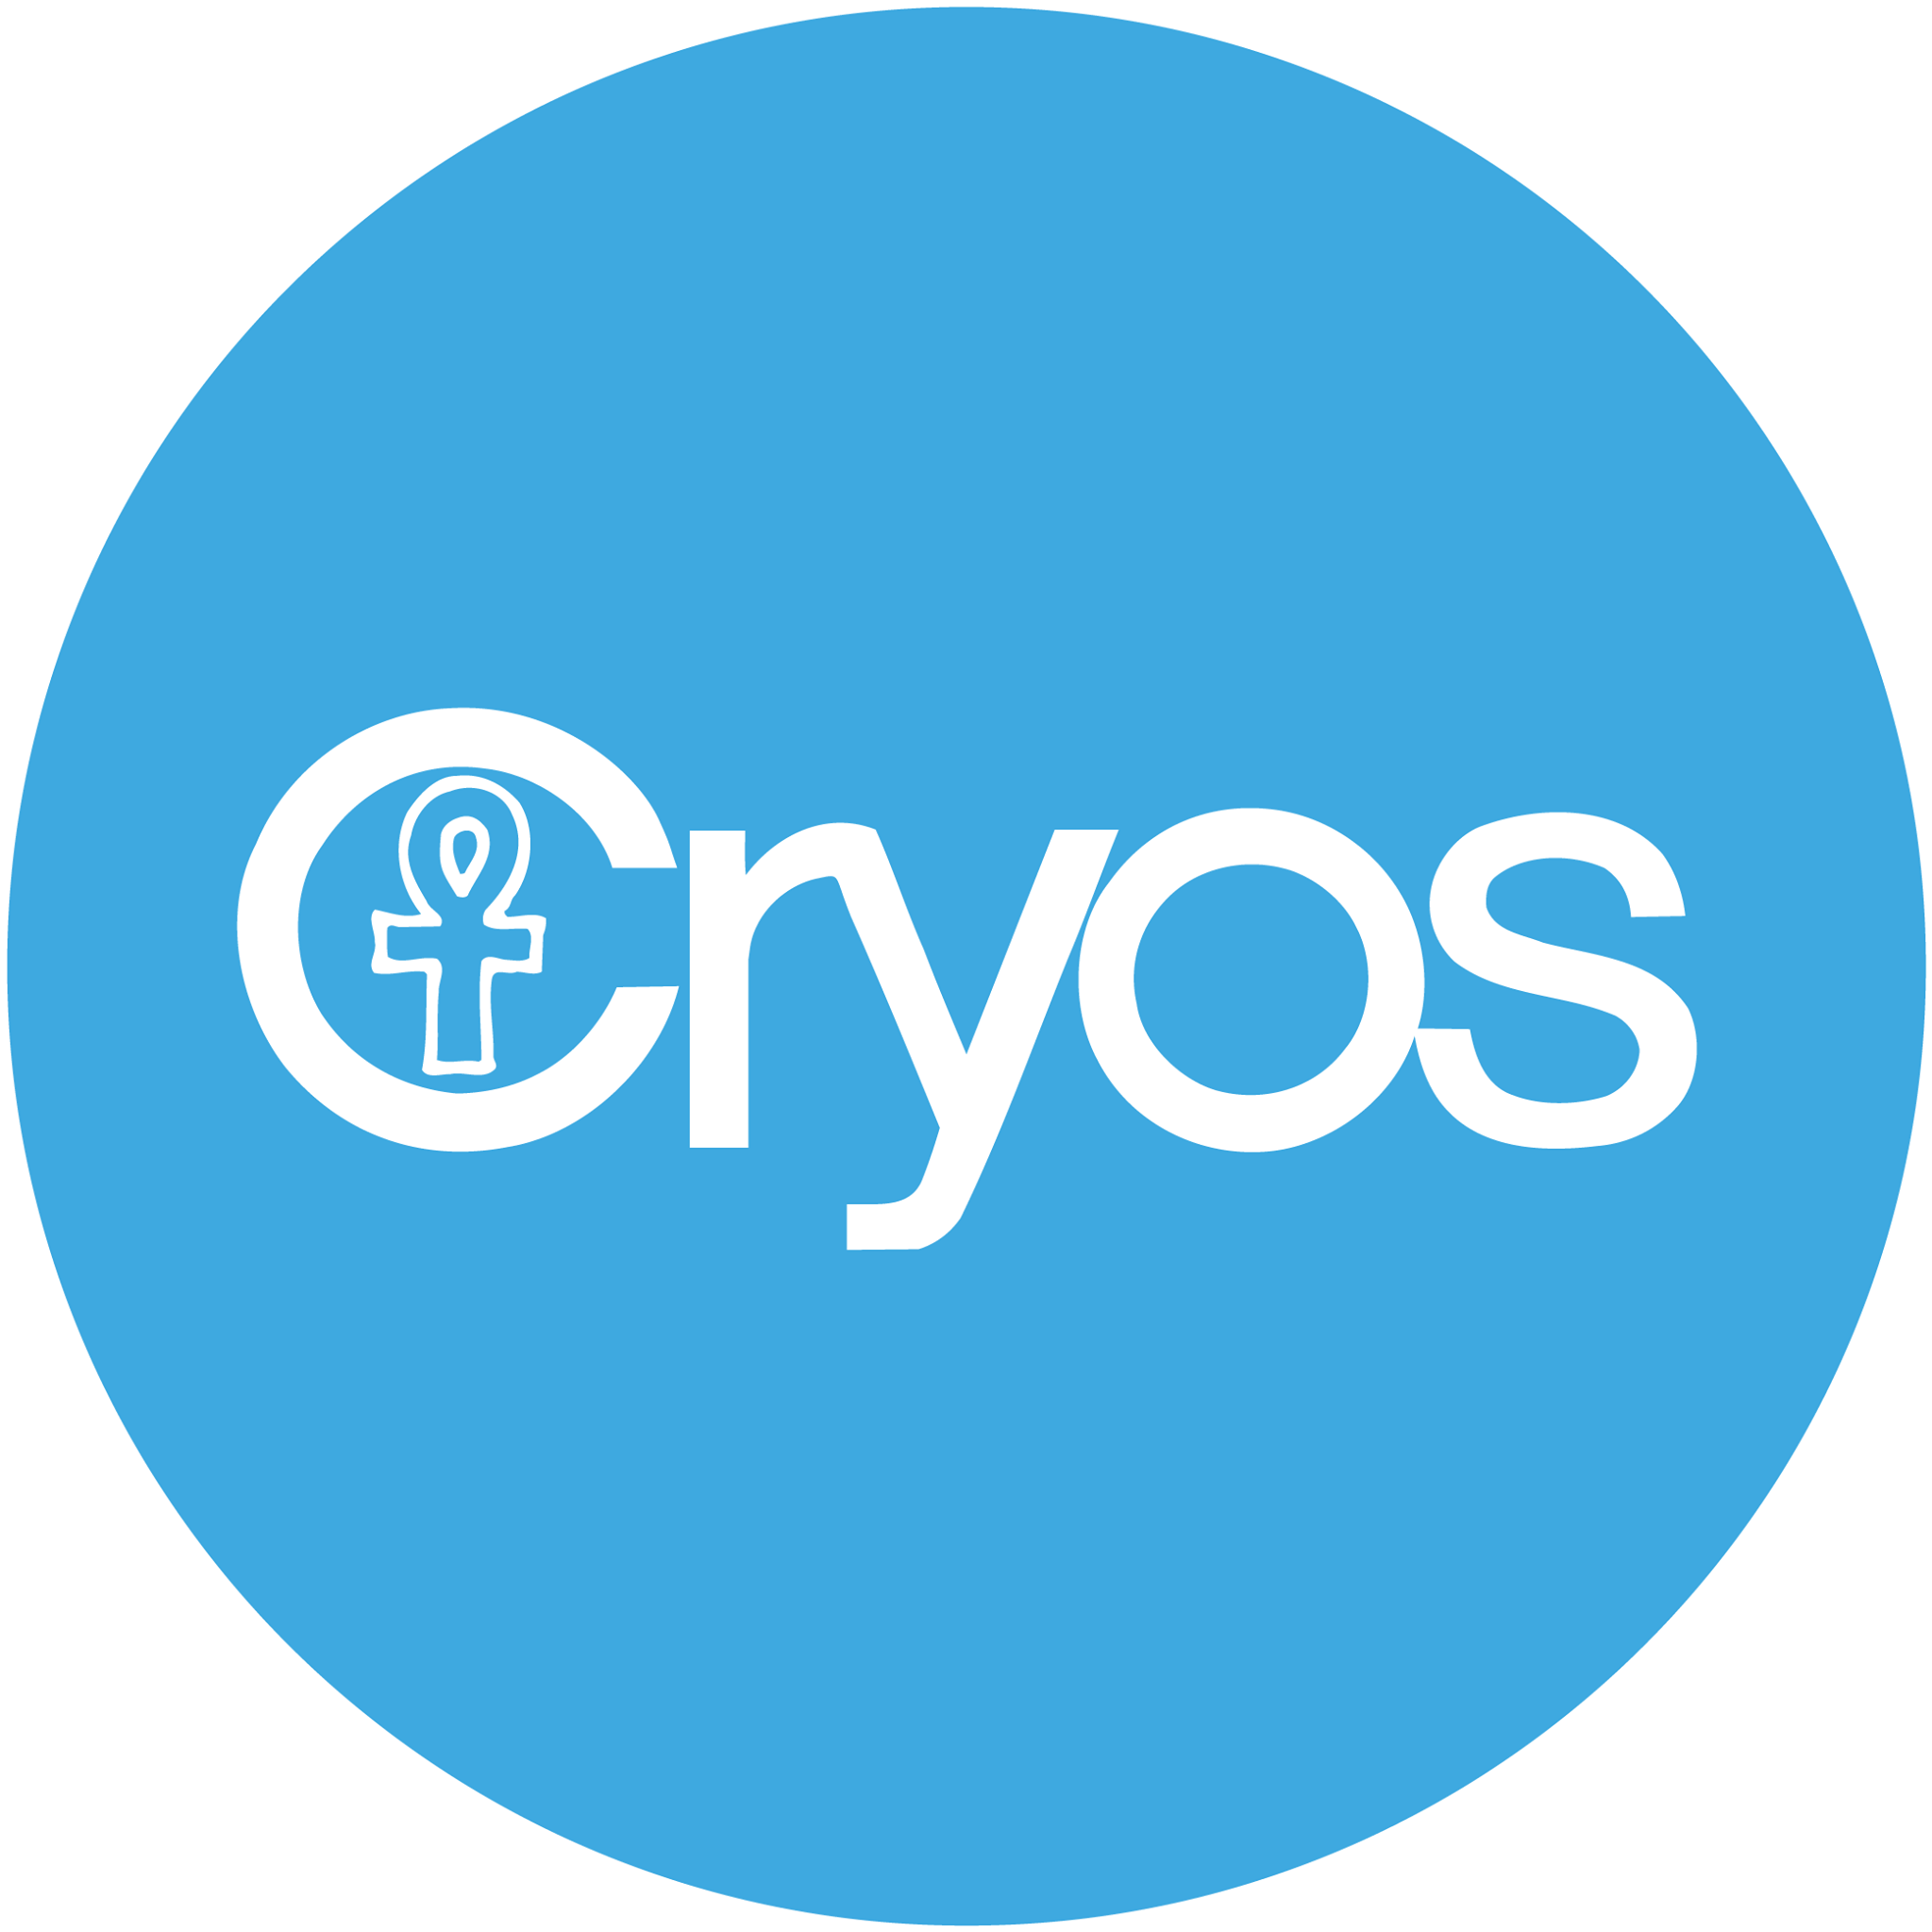 Logo des Samenbank Cryos International